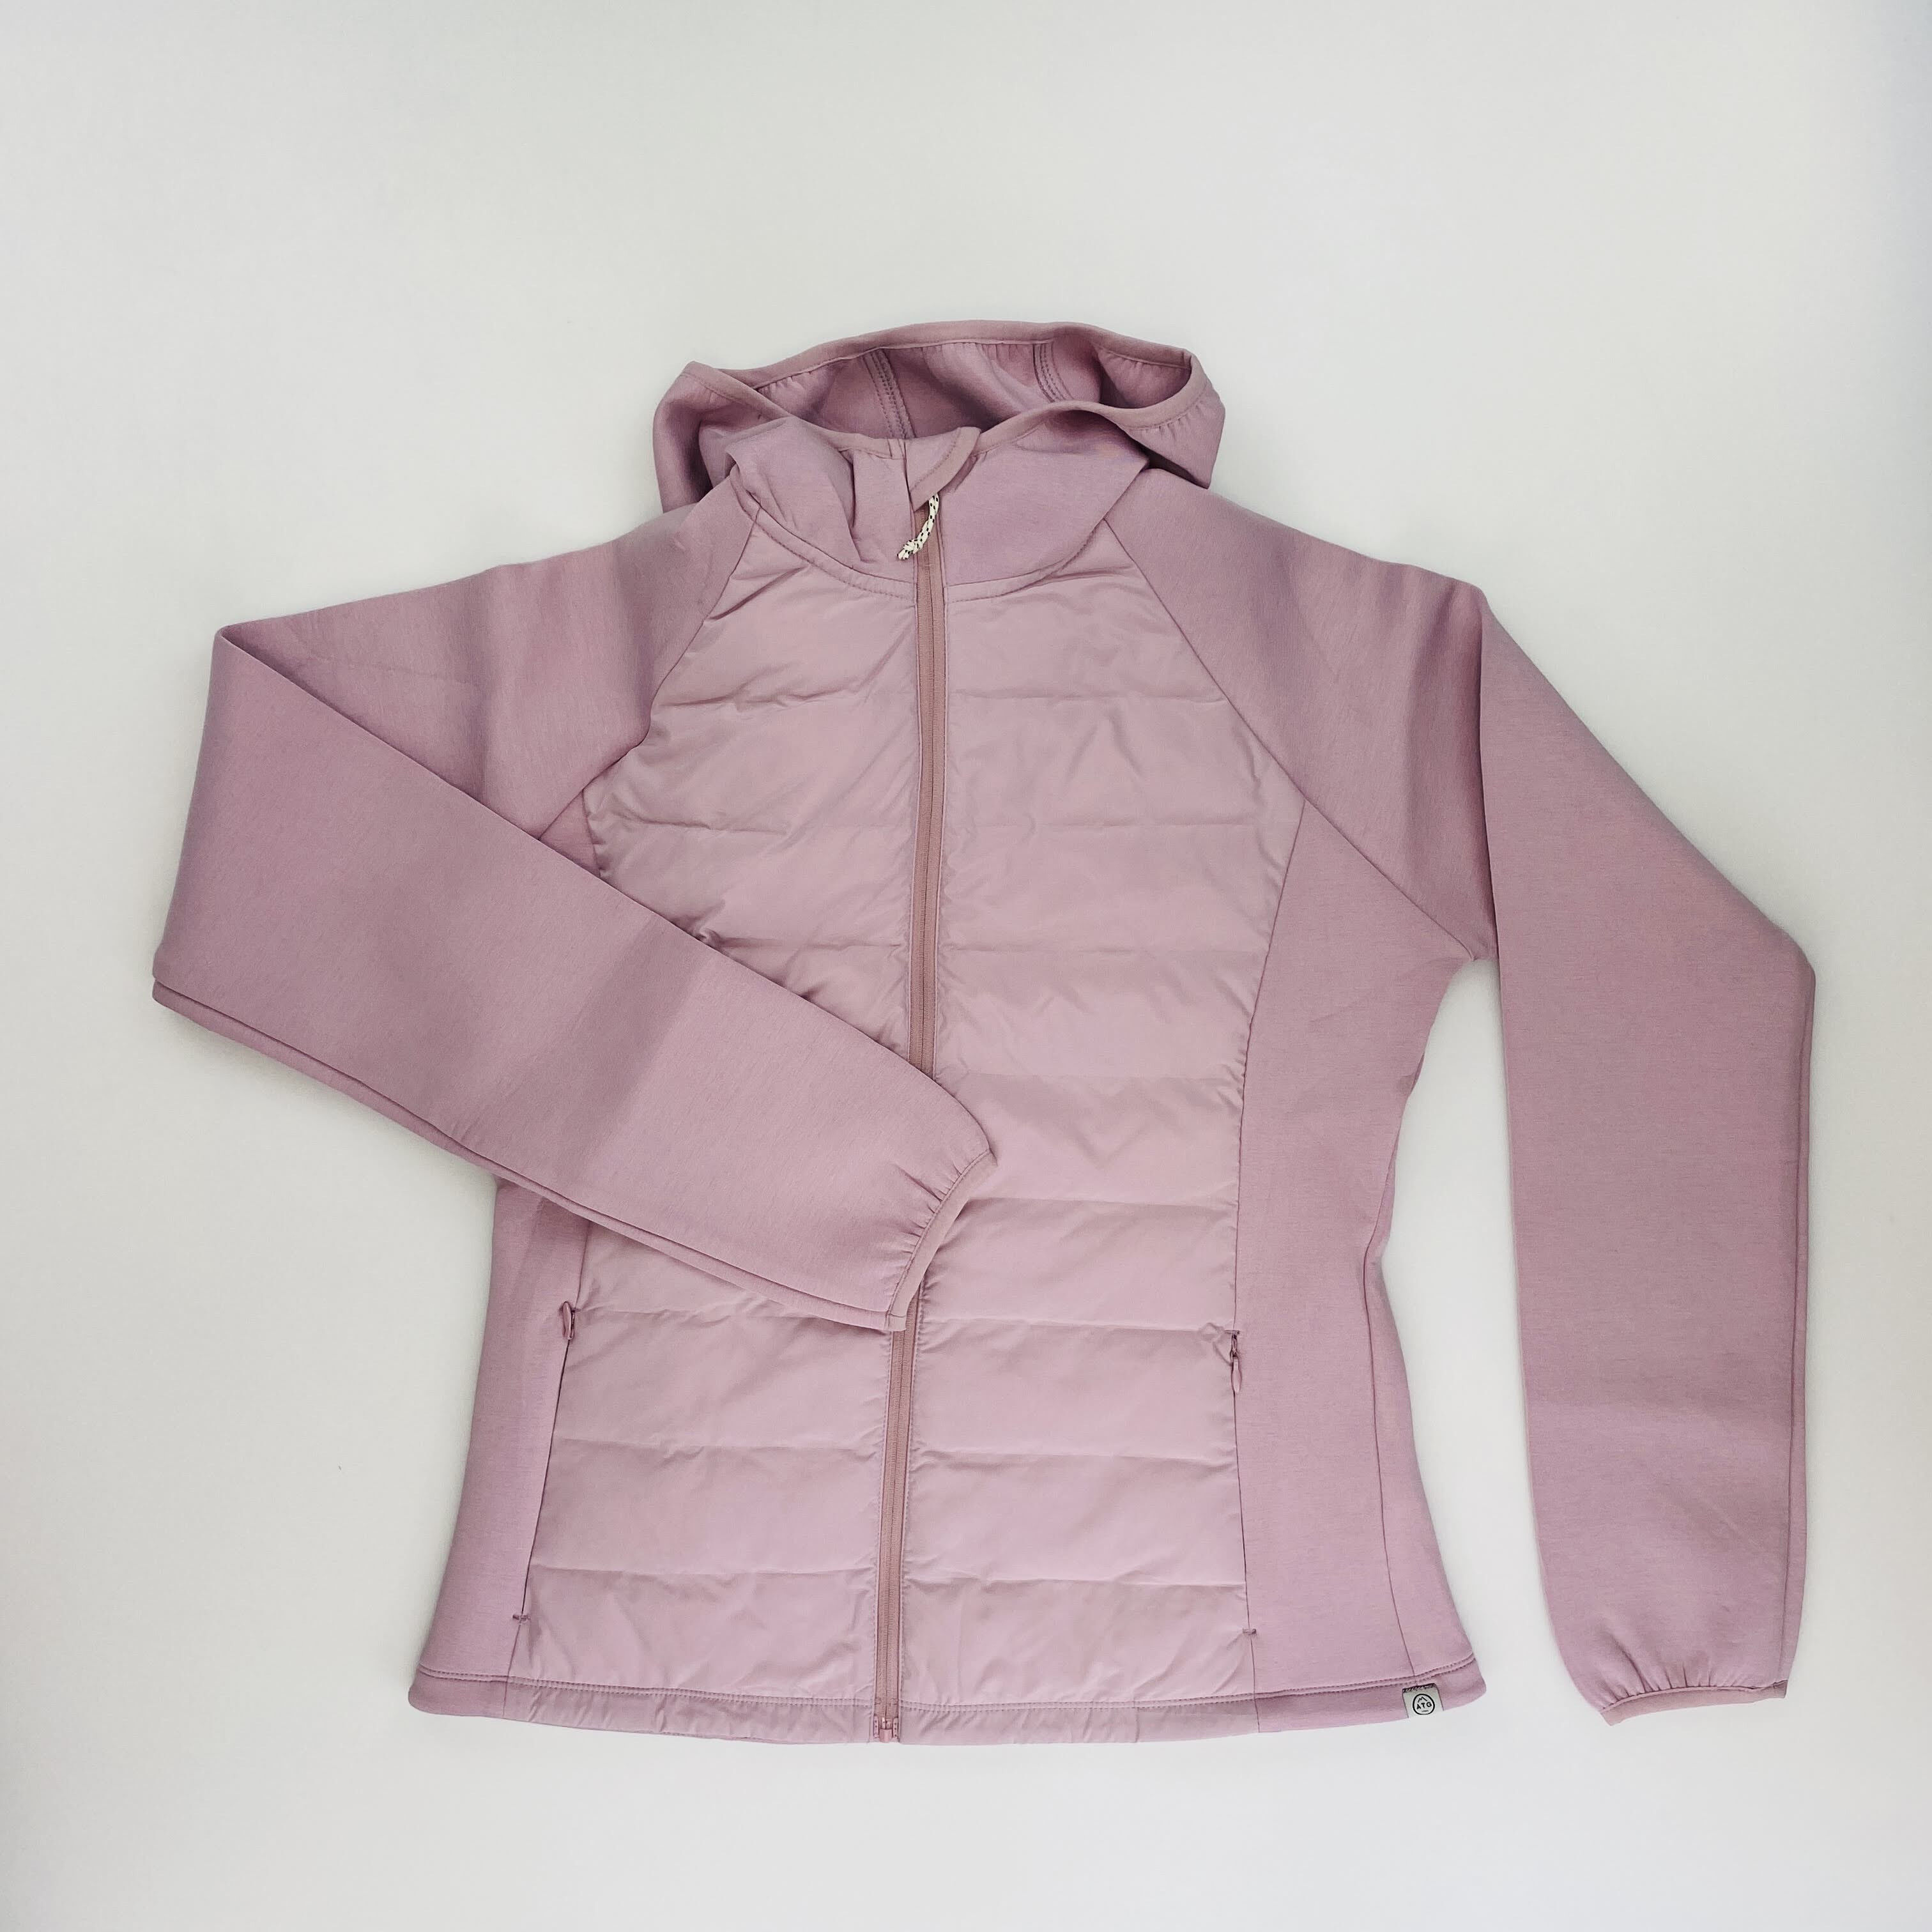 Wrangler Athletic Hybrid Jacket - Second Hand Synthetic jacket - Women's - Pink - S | Hardloop